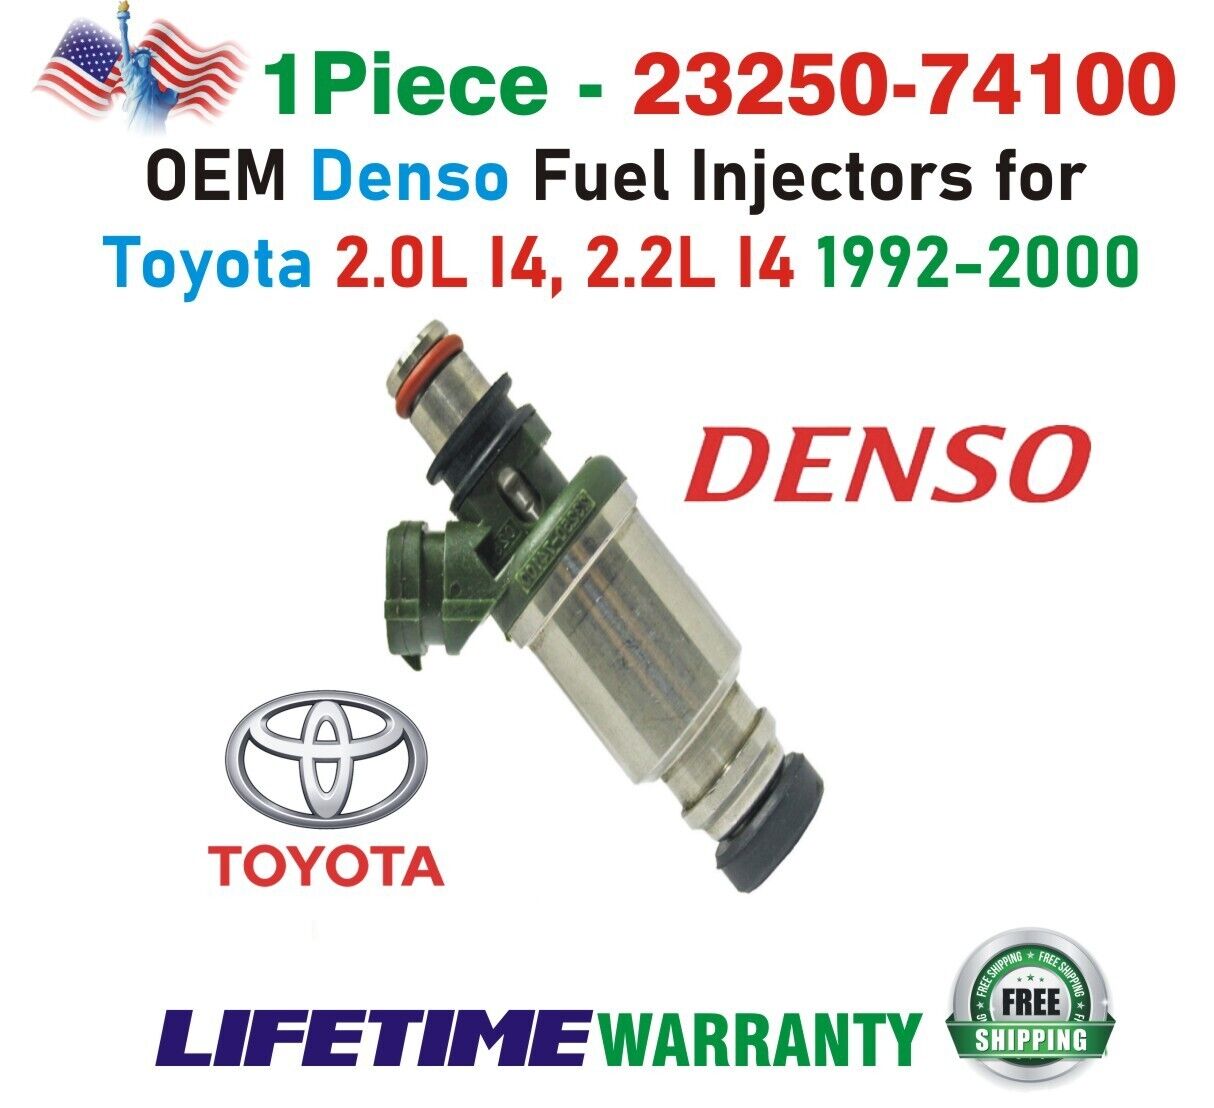 OEM Single x1 Denso Fuel Injector for 1992-2000 Toyota 2.0L 2.2L I4 #23250-74100